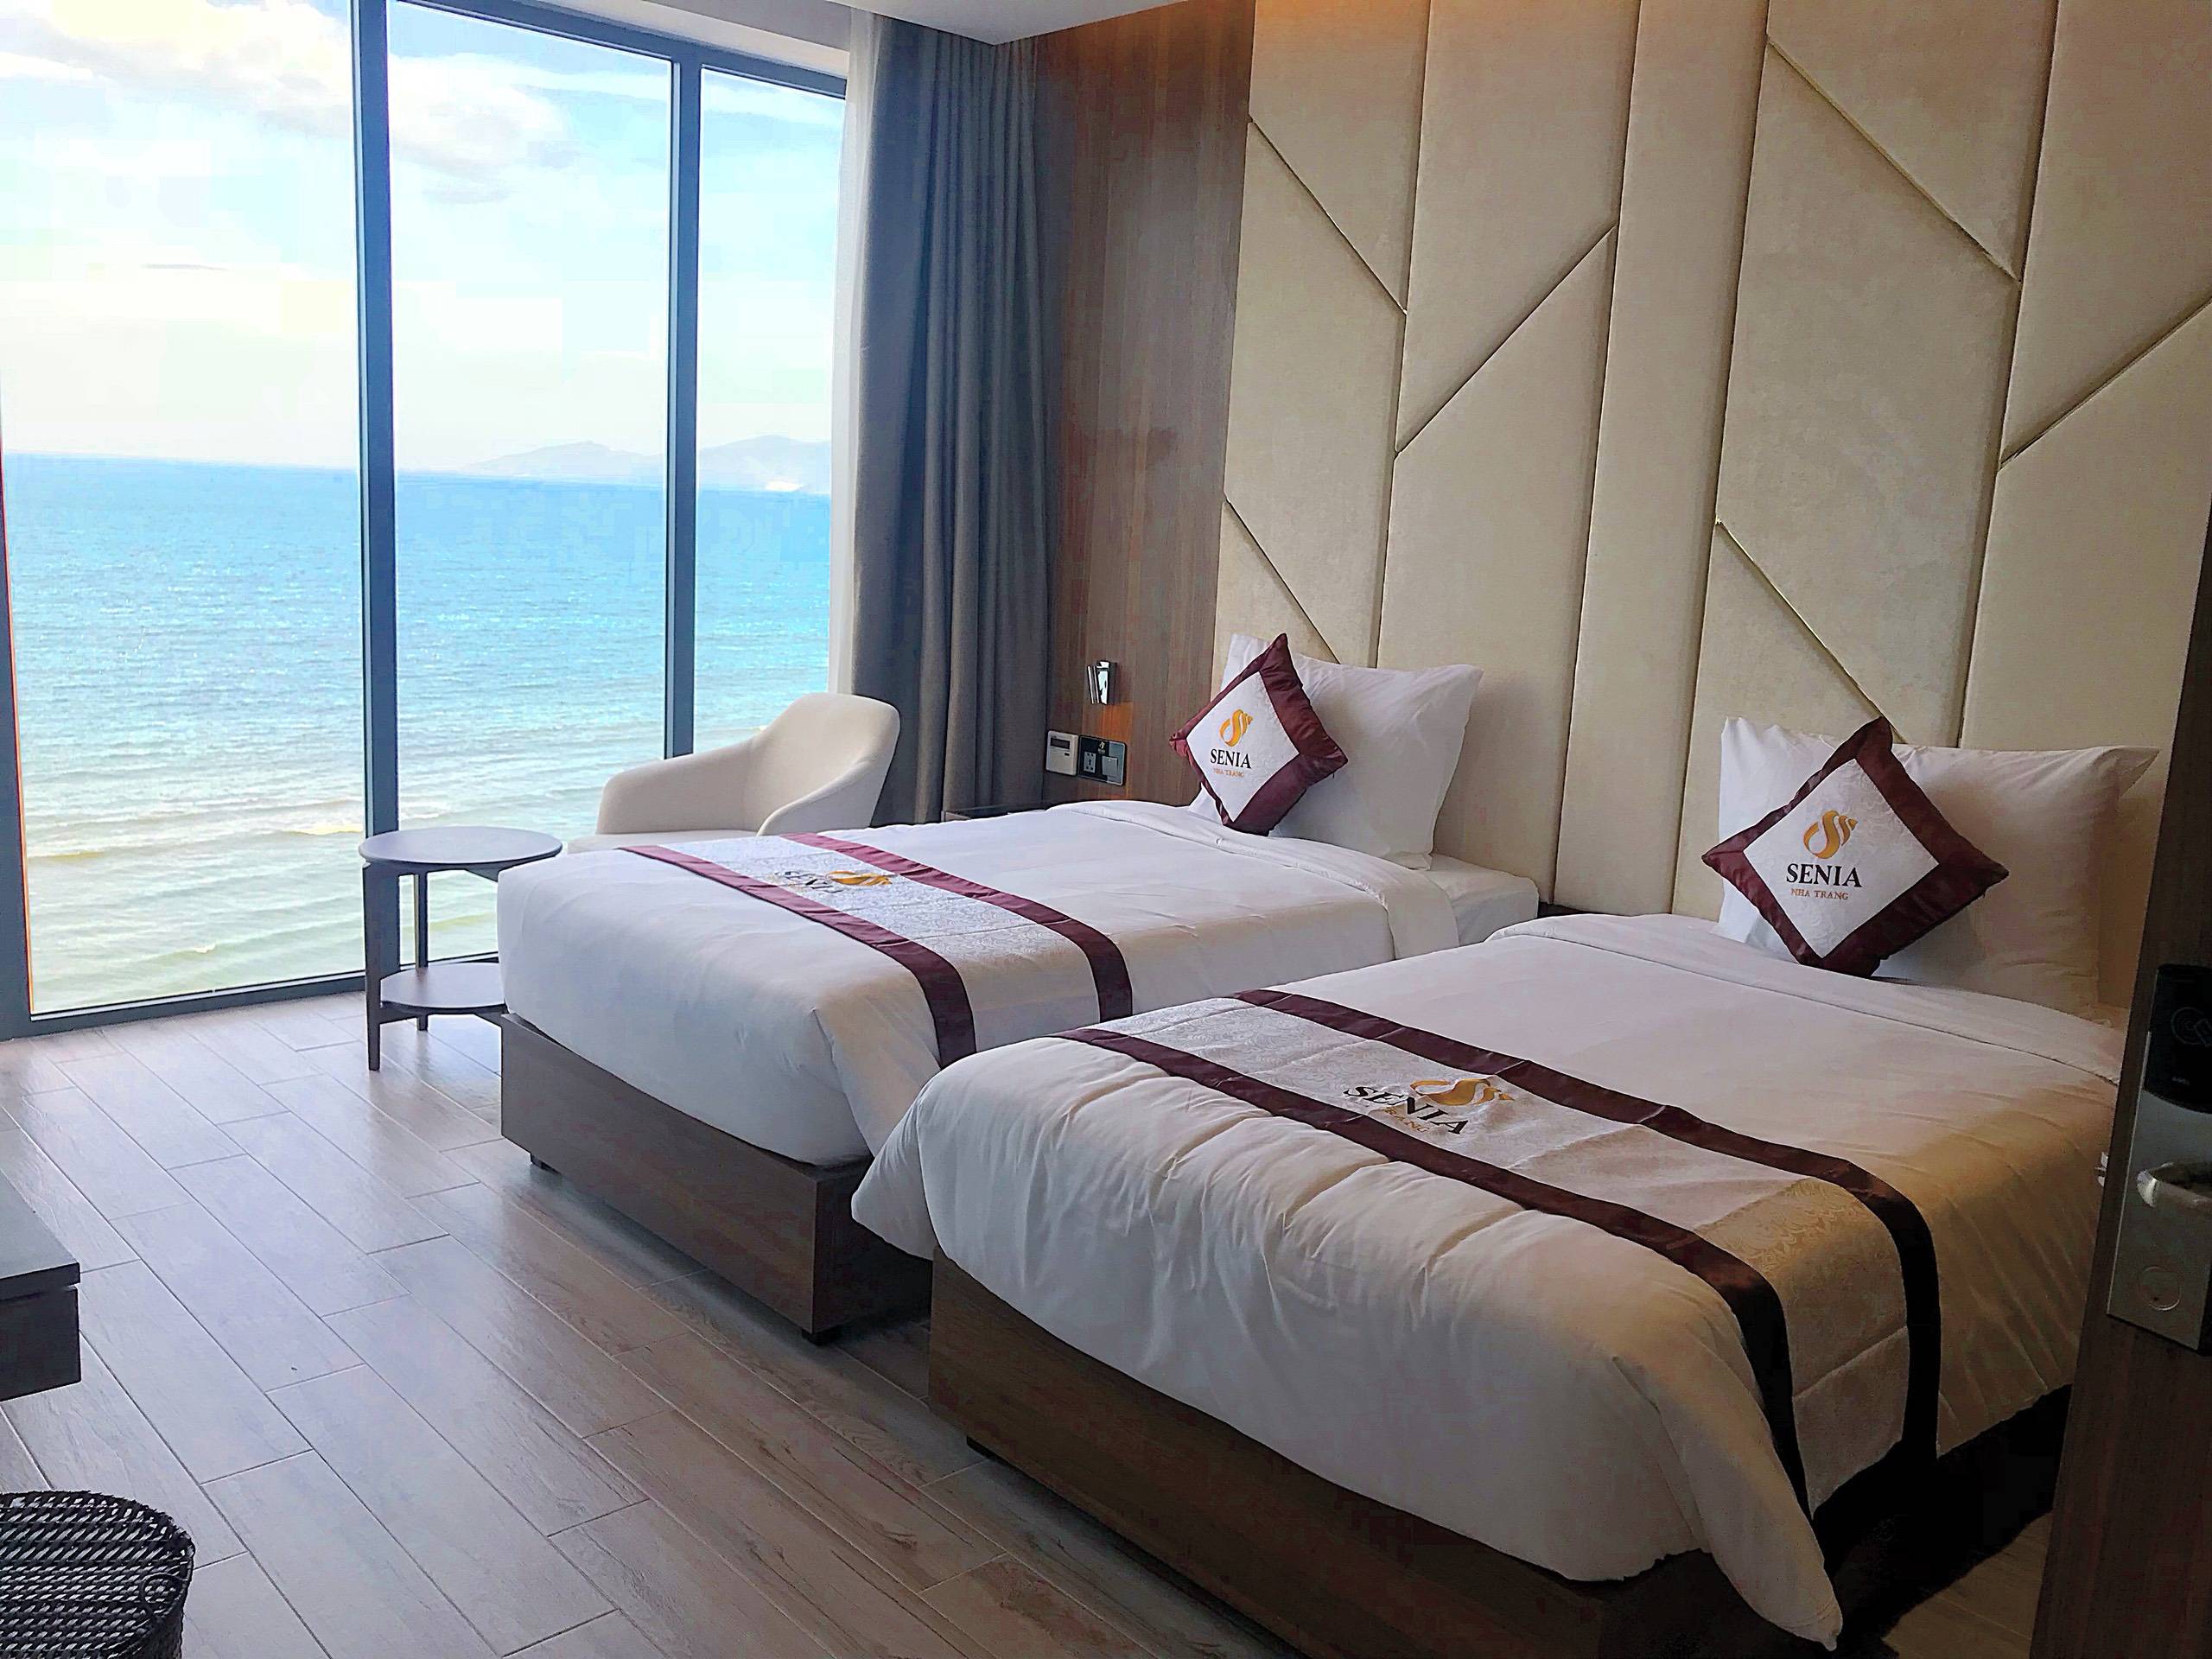 Green hotel 3* - вьетнам, кханьхоа - отели | пегас туристик